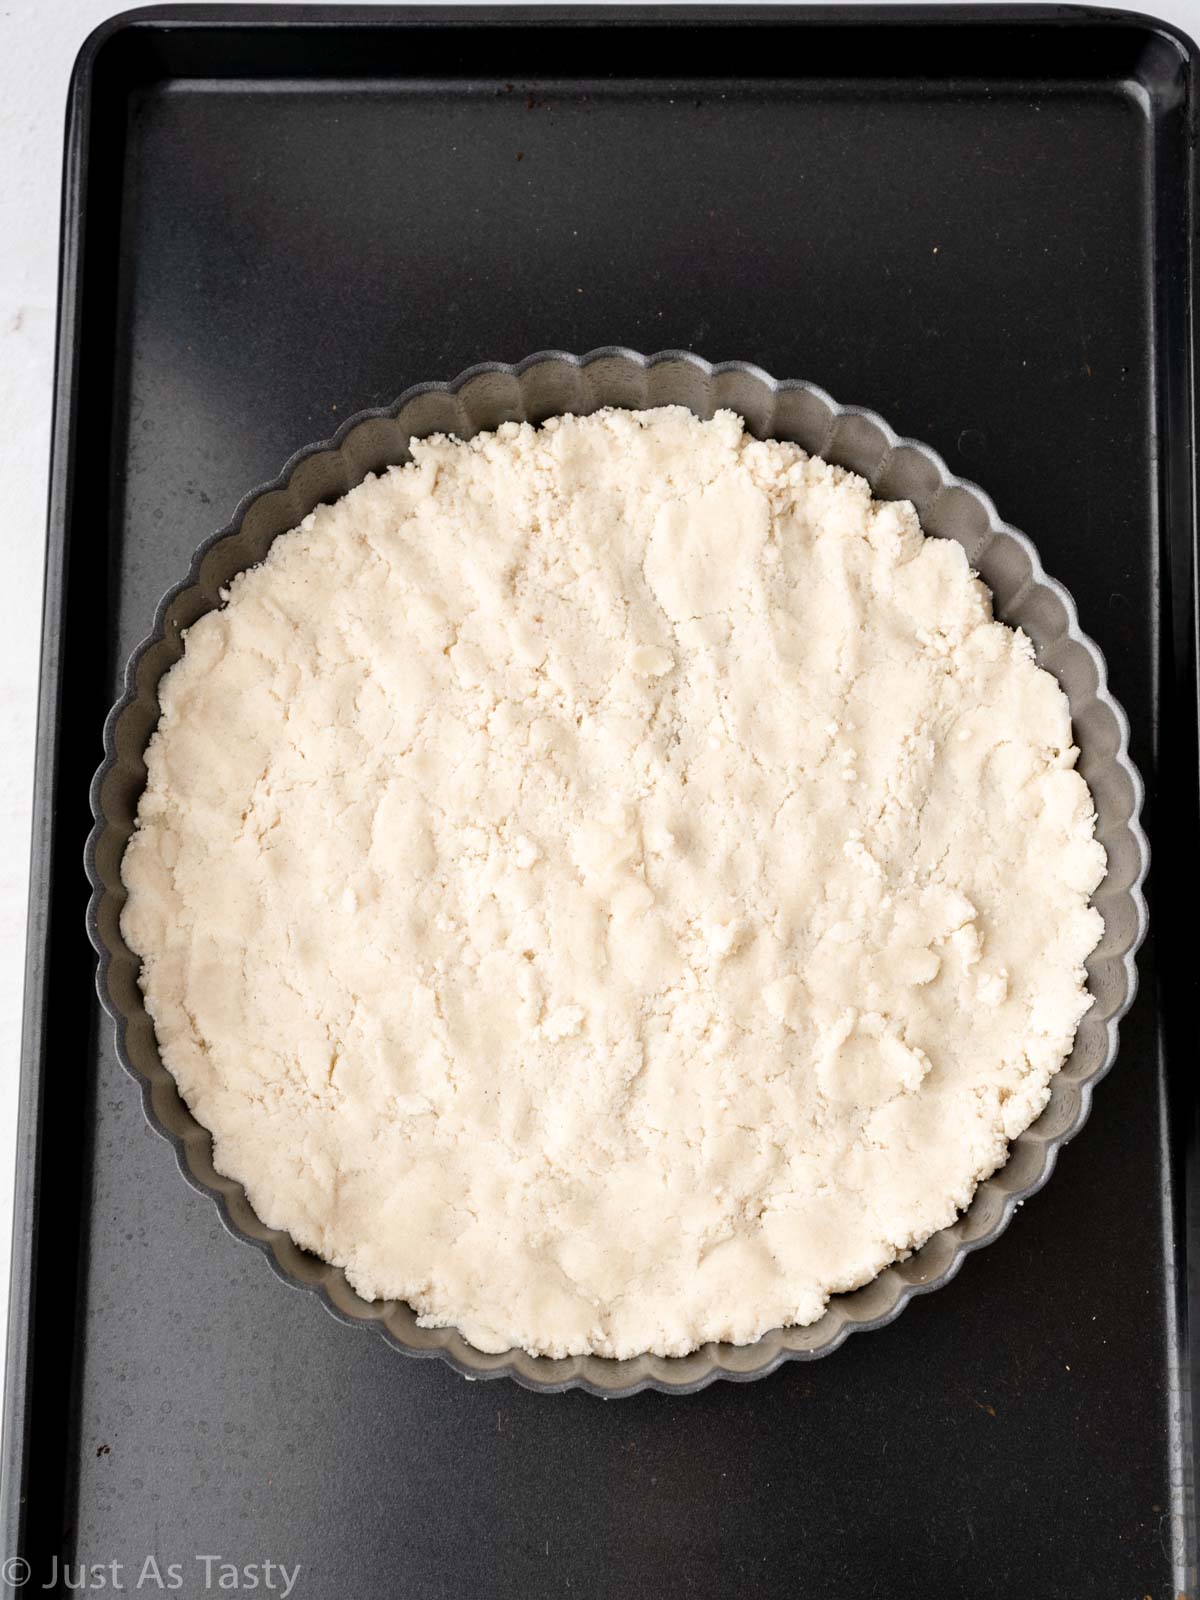 Shortbread crust in tart pan.